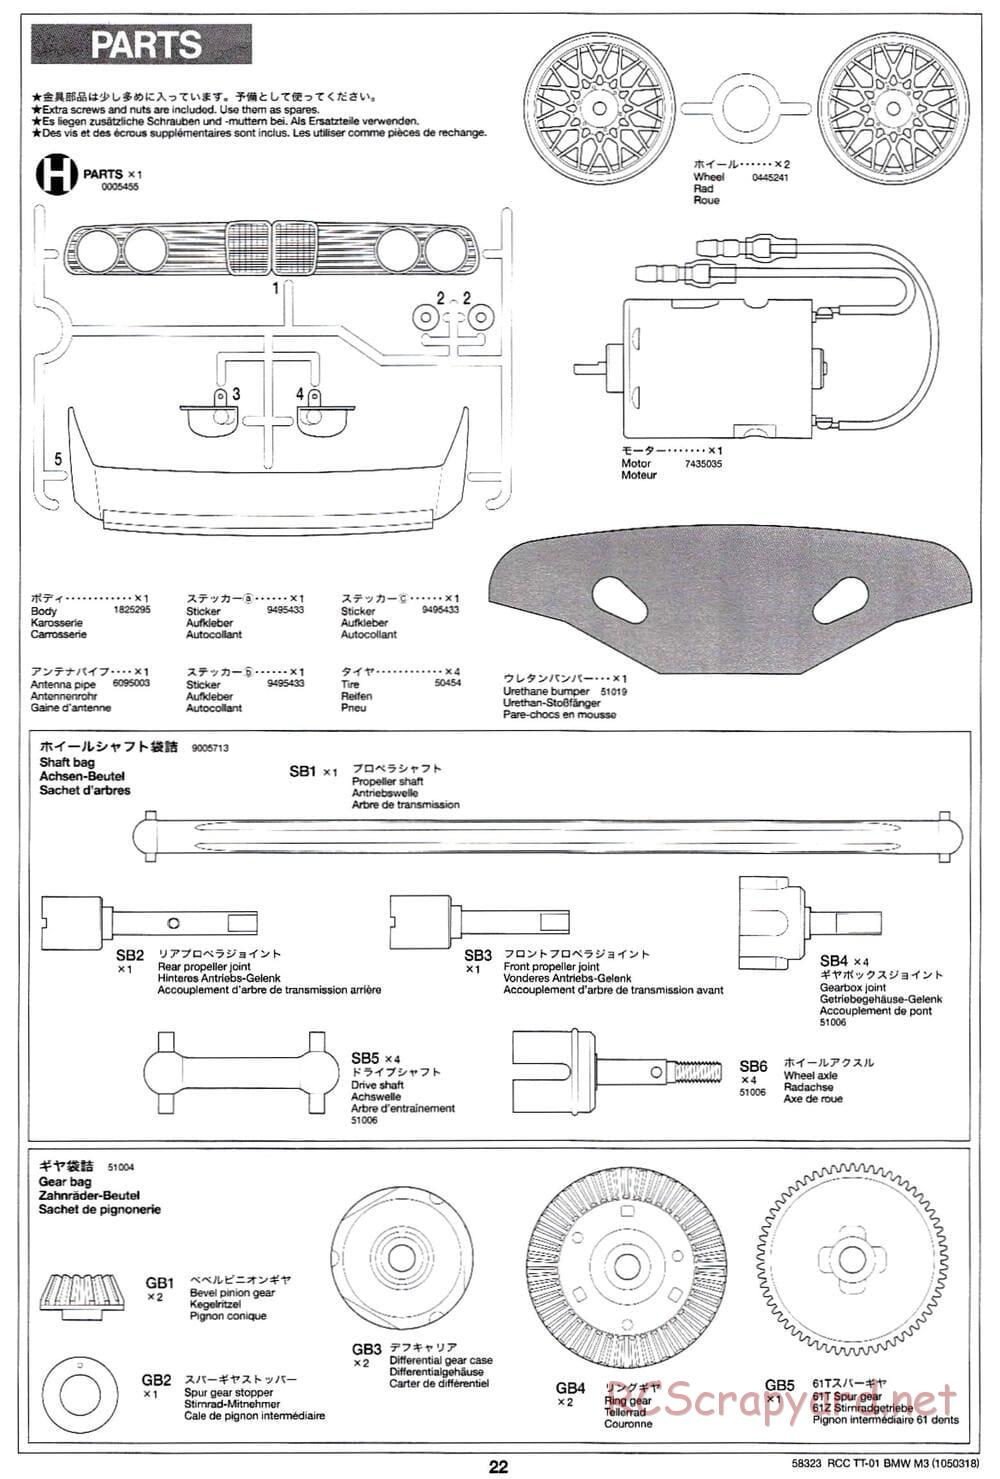 Tamiya - Schnitzer BMW M3 Sport Evo - TT-01 Chassis - Manual - Page 22